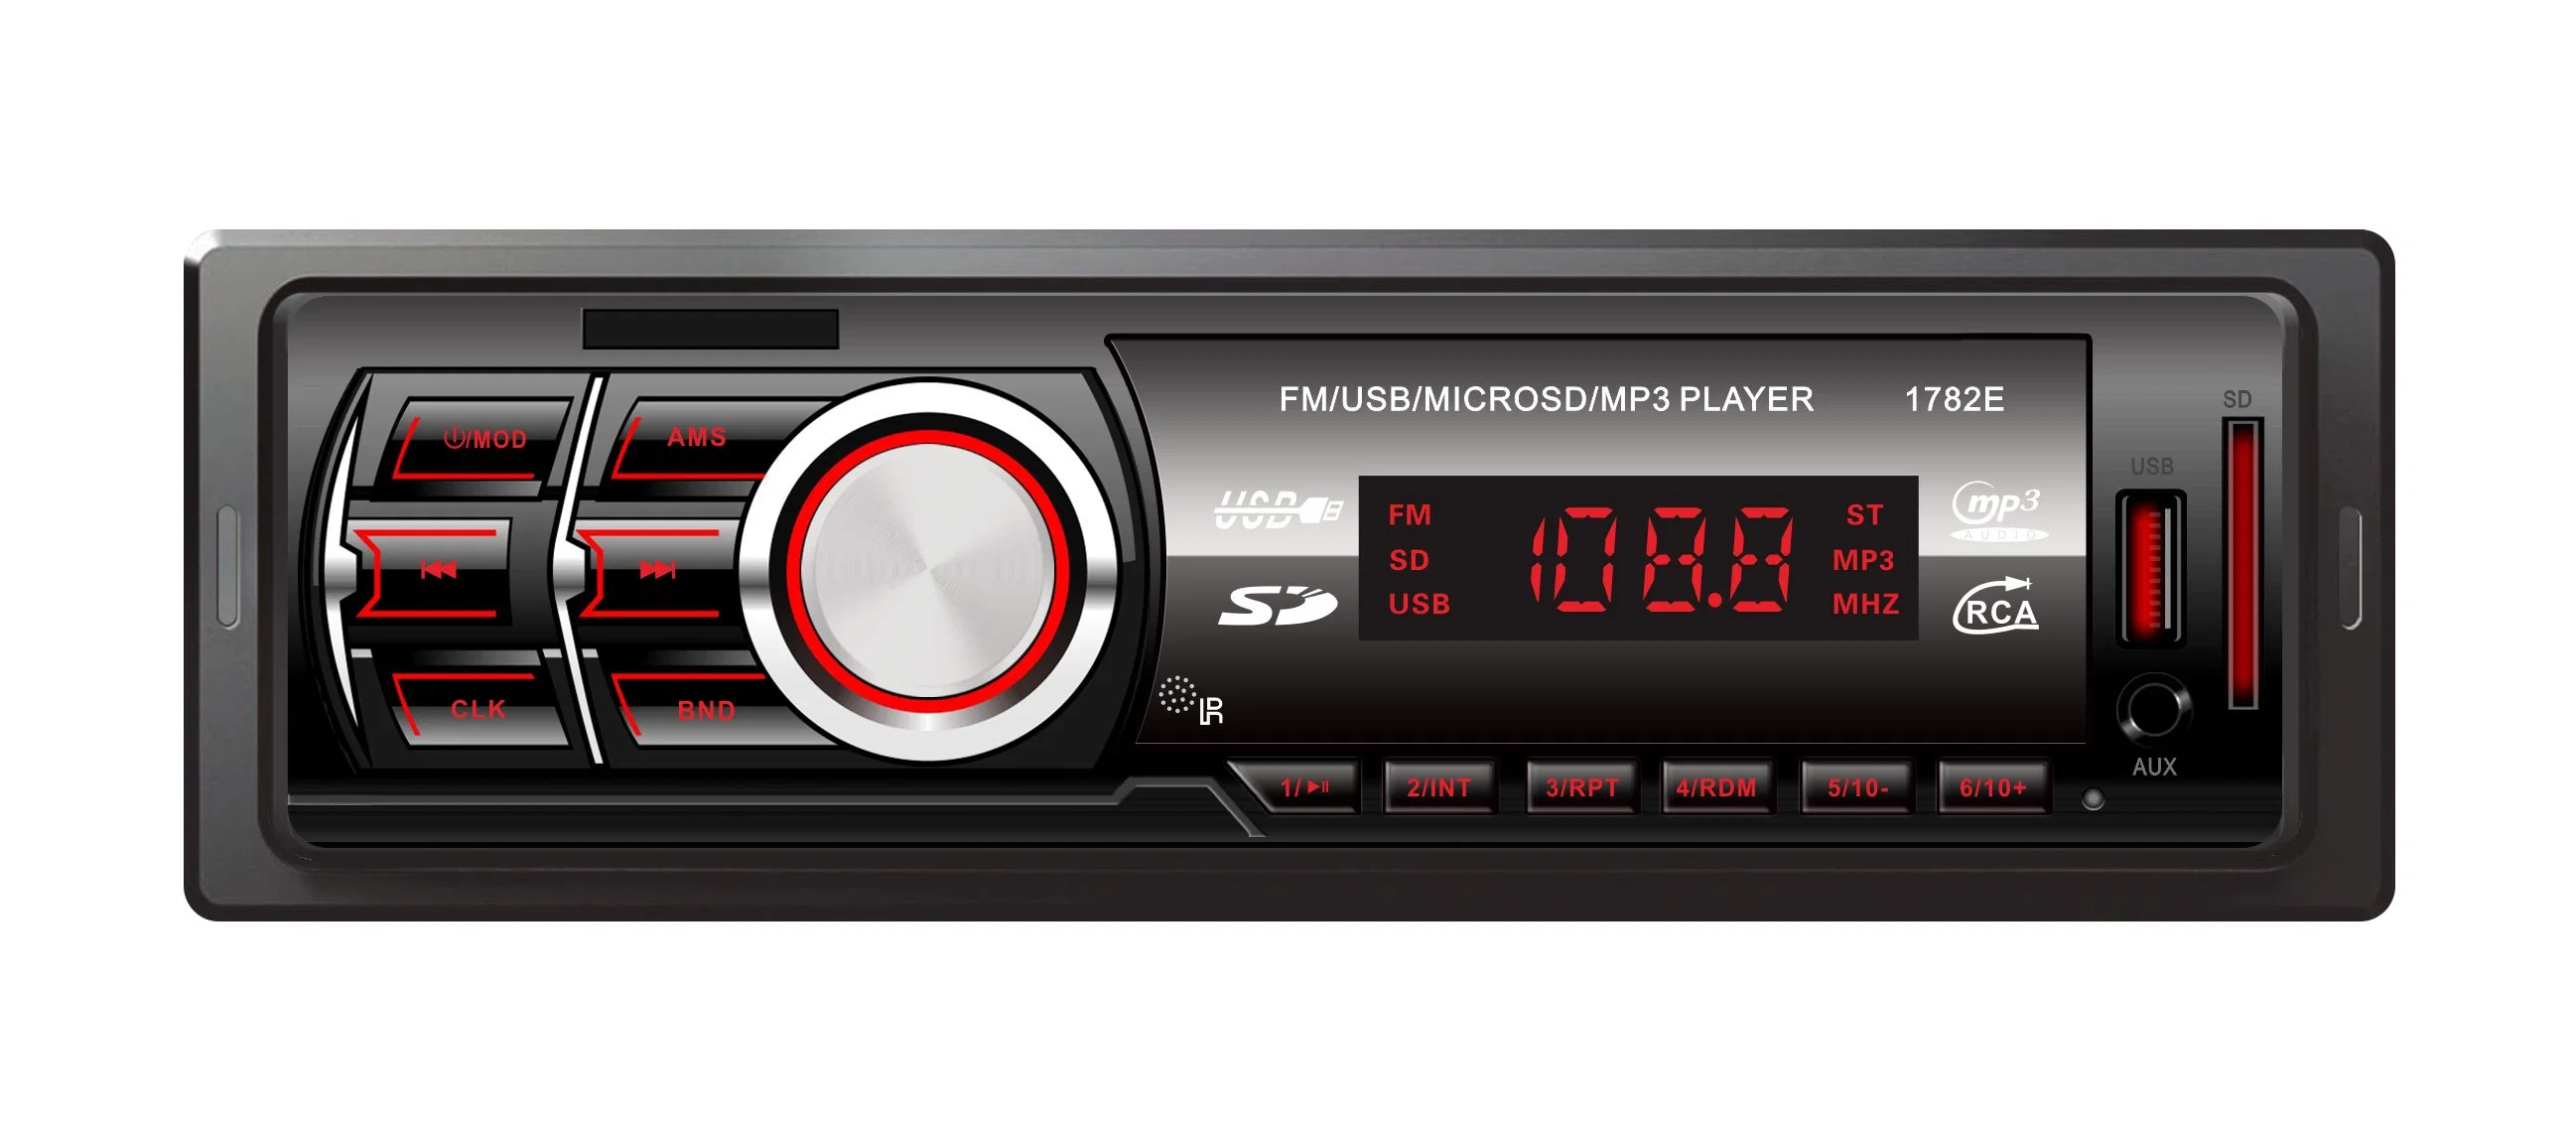 MP3 Player Audio Video Digital Car Stereo Head Unit